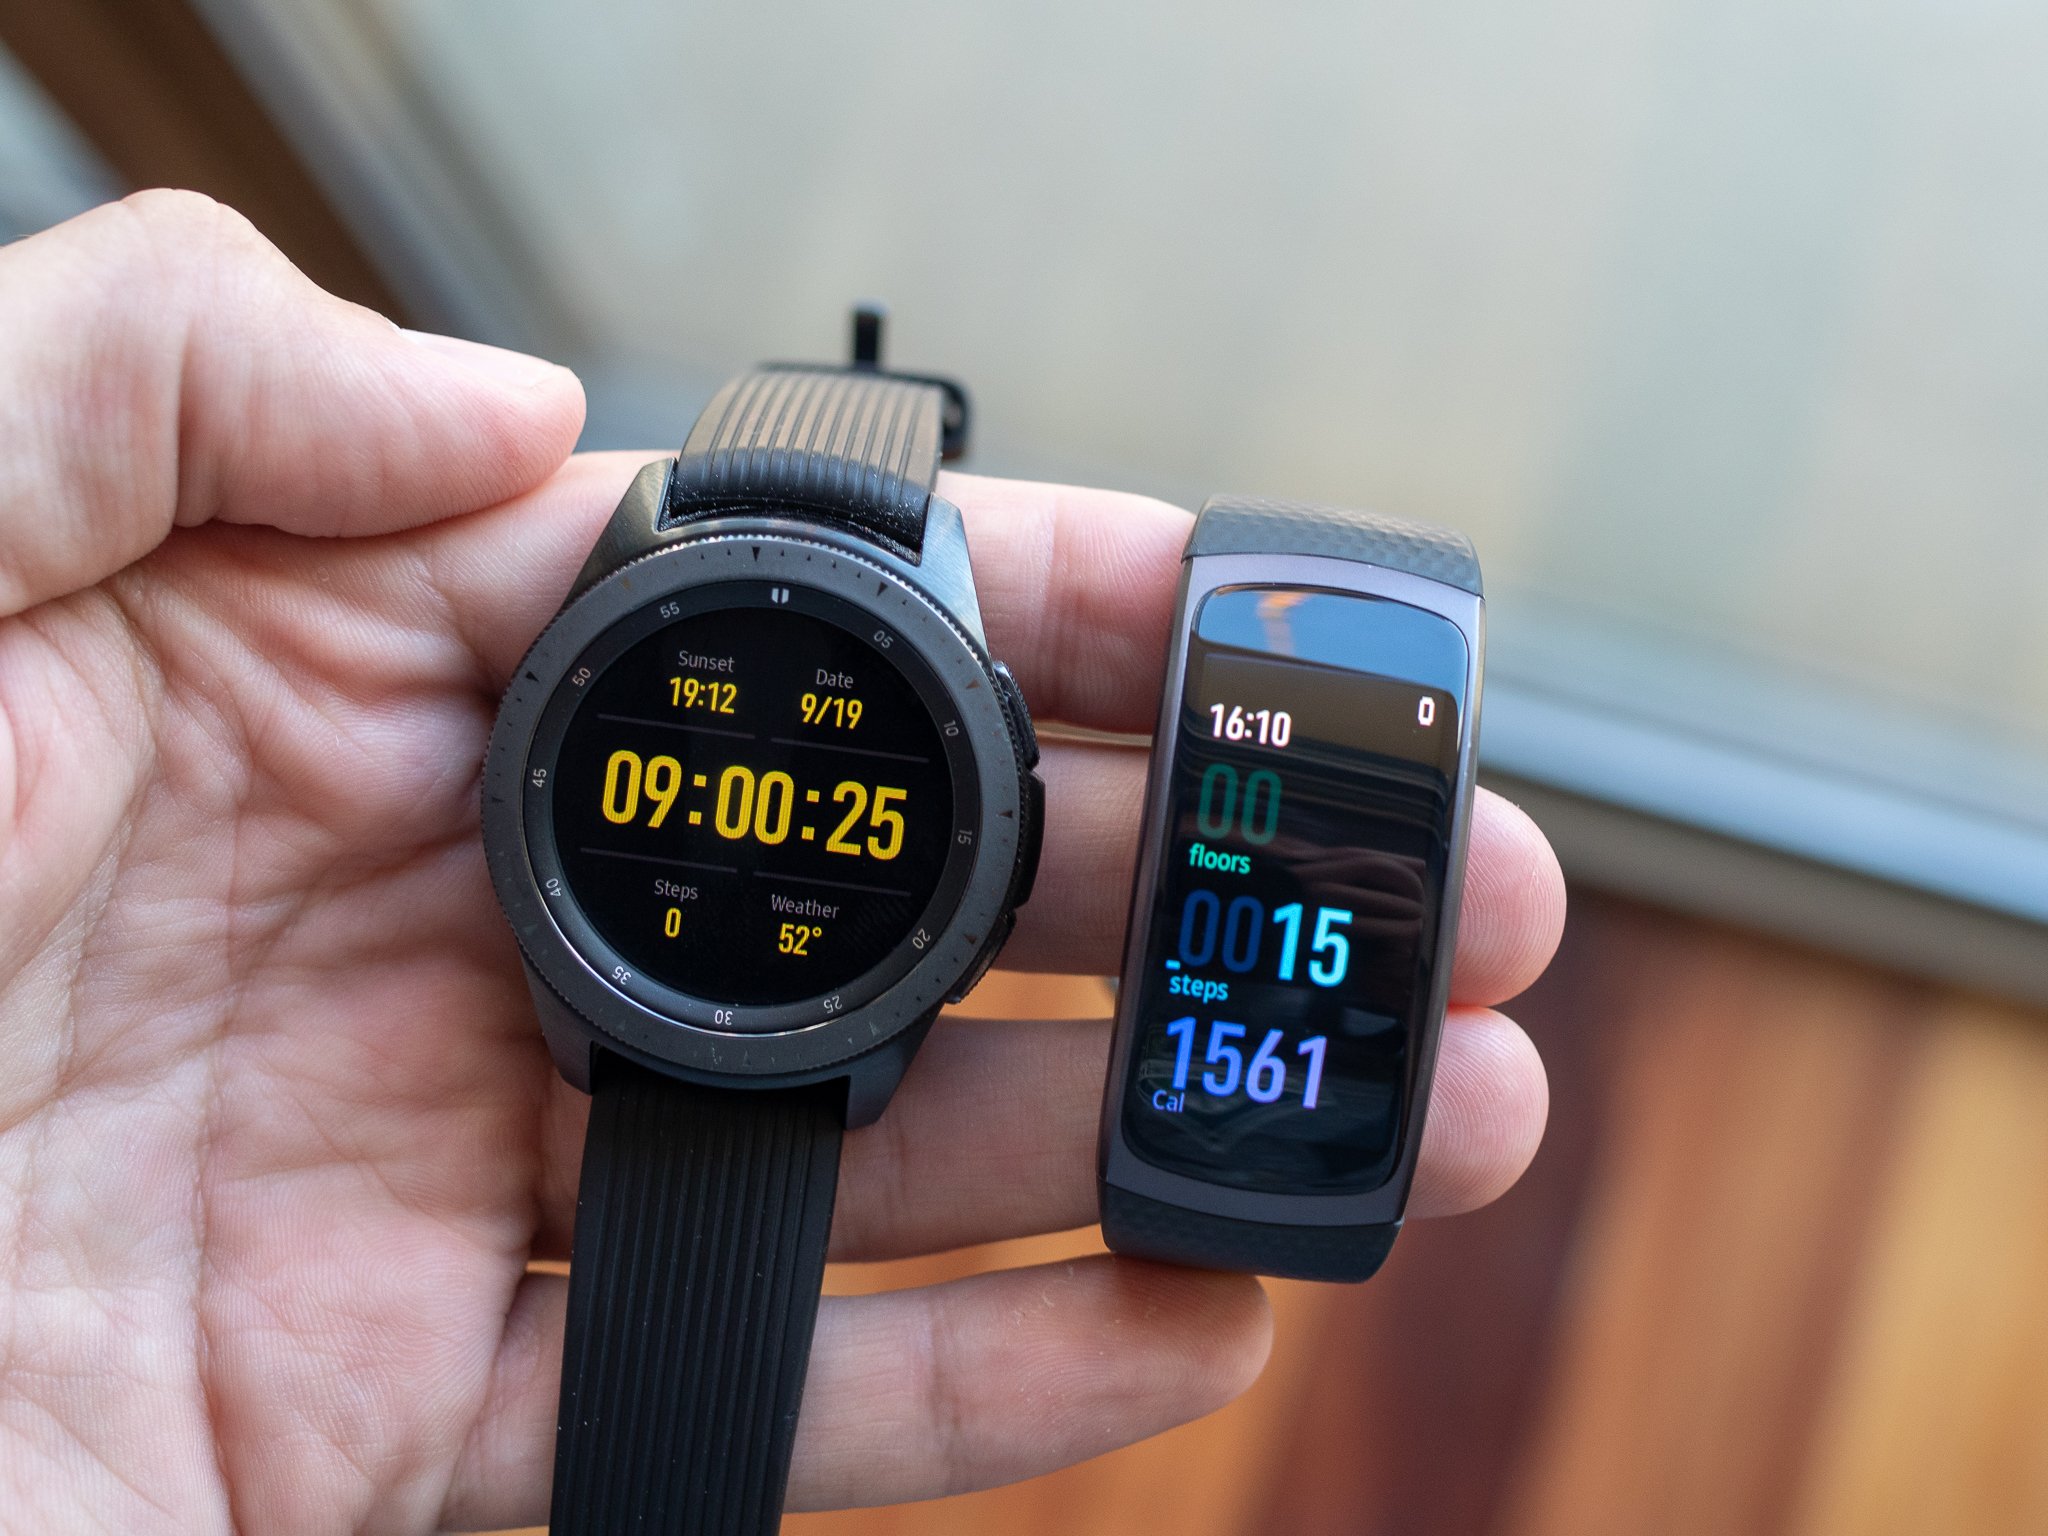 Samsung Galaxy Watch vs. Gear Fit2 Pro 